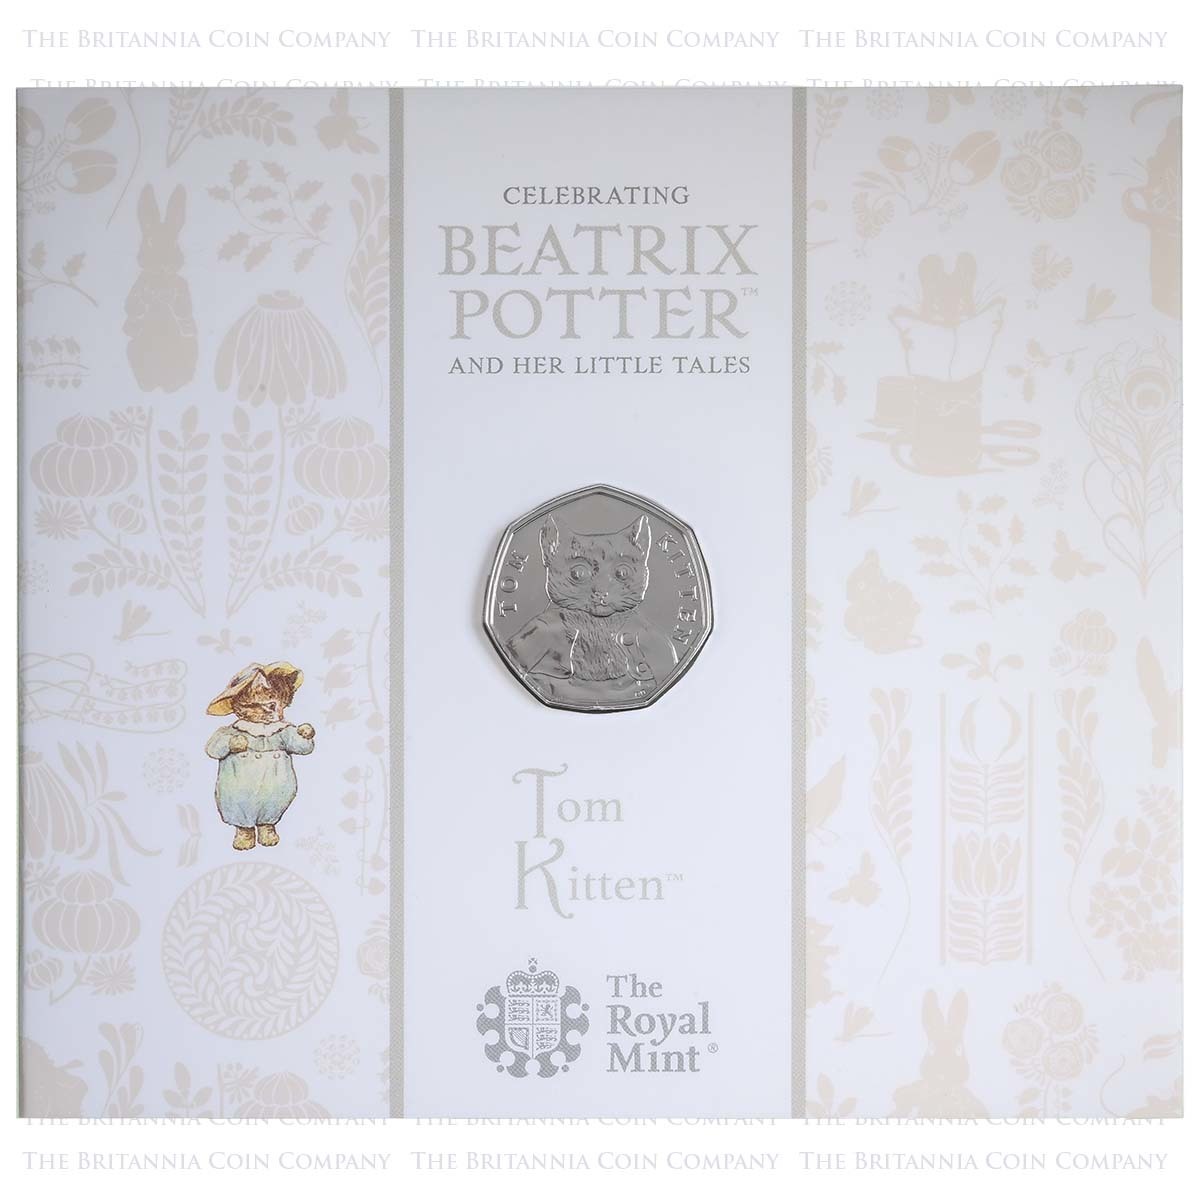 UK17TKBU 2017 Beatrix Potter Tom Kitten Fifty Pence Brilliant Uncirculated Coin In Folder Packaging